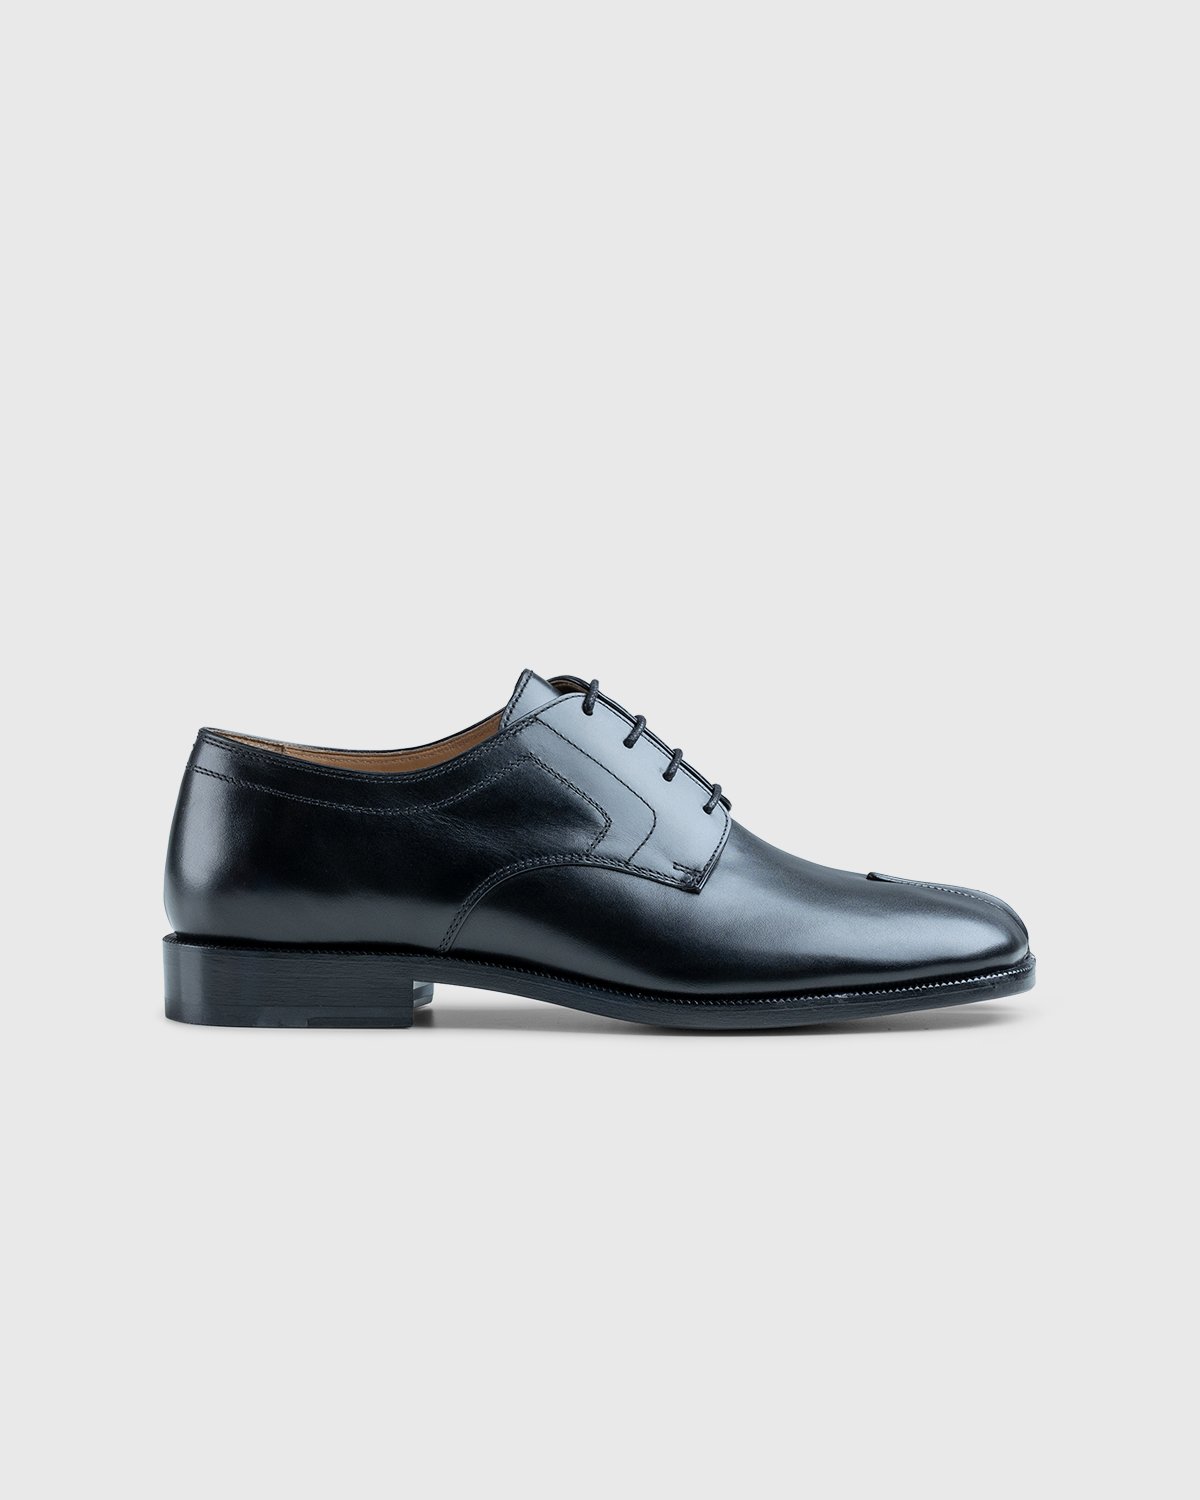 Maison Margiela - Tabi Lace-up Shoes Black - Footwear - Black - Image 1